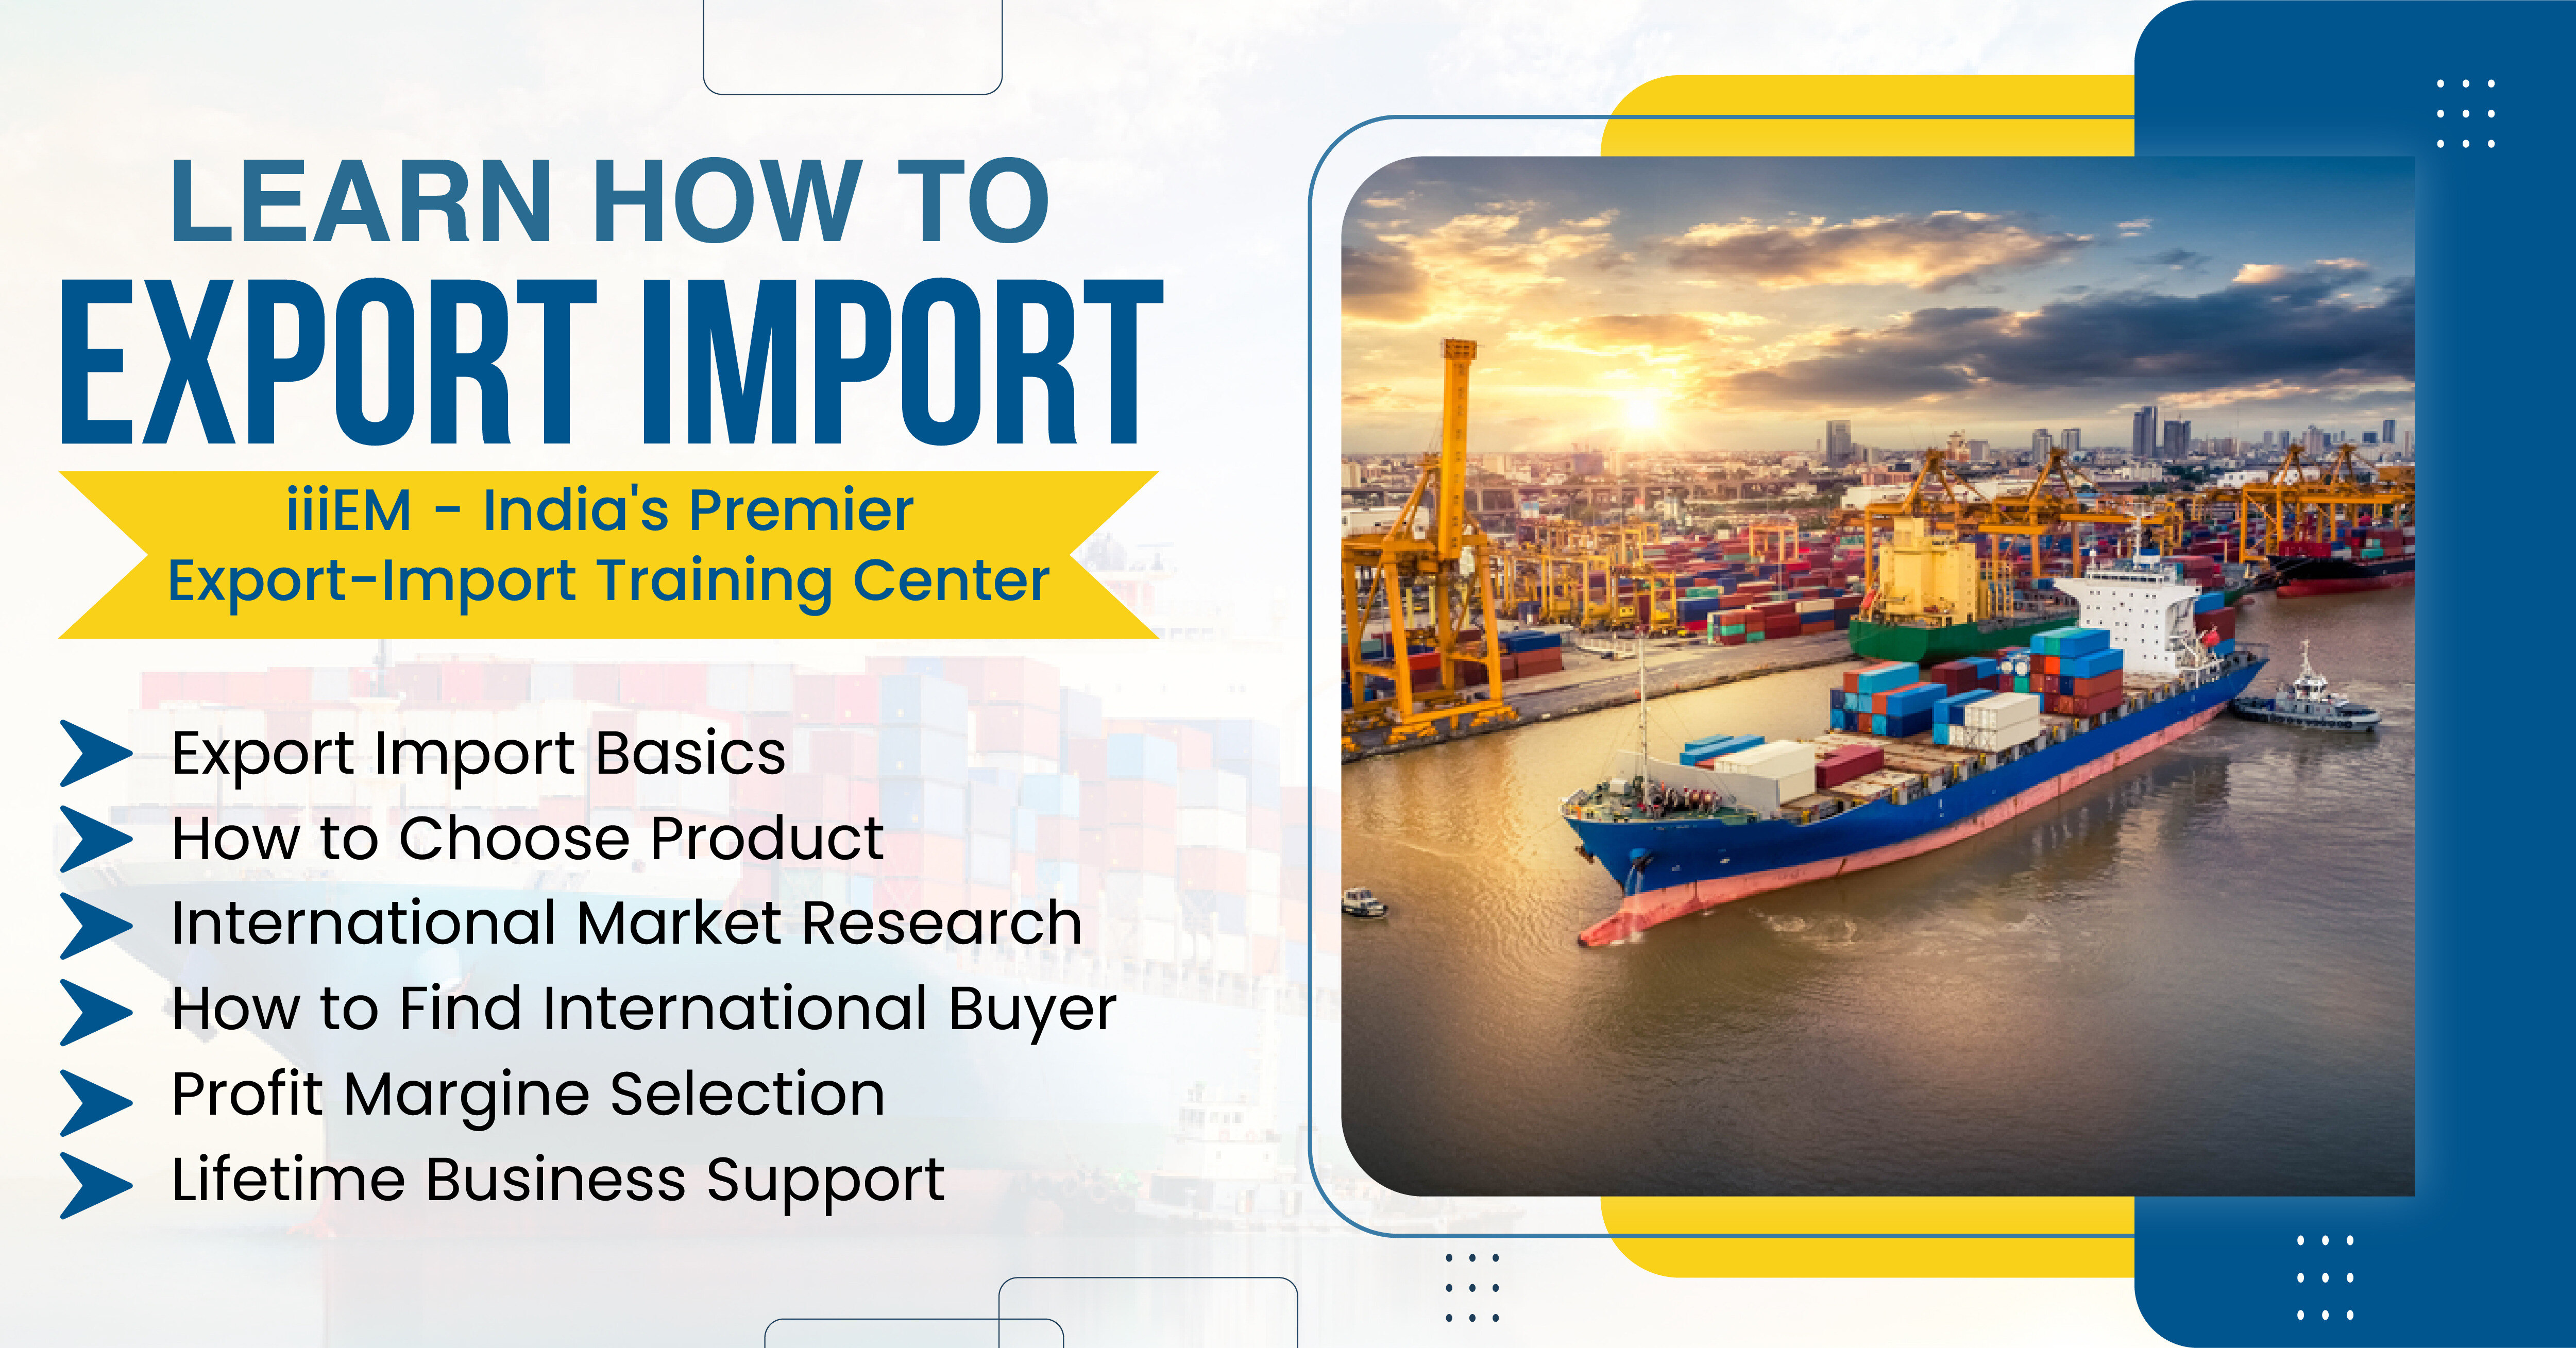 Certified Export Import Business Training in Indore, Indore, Madhya Pradesh, India